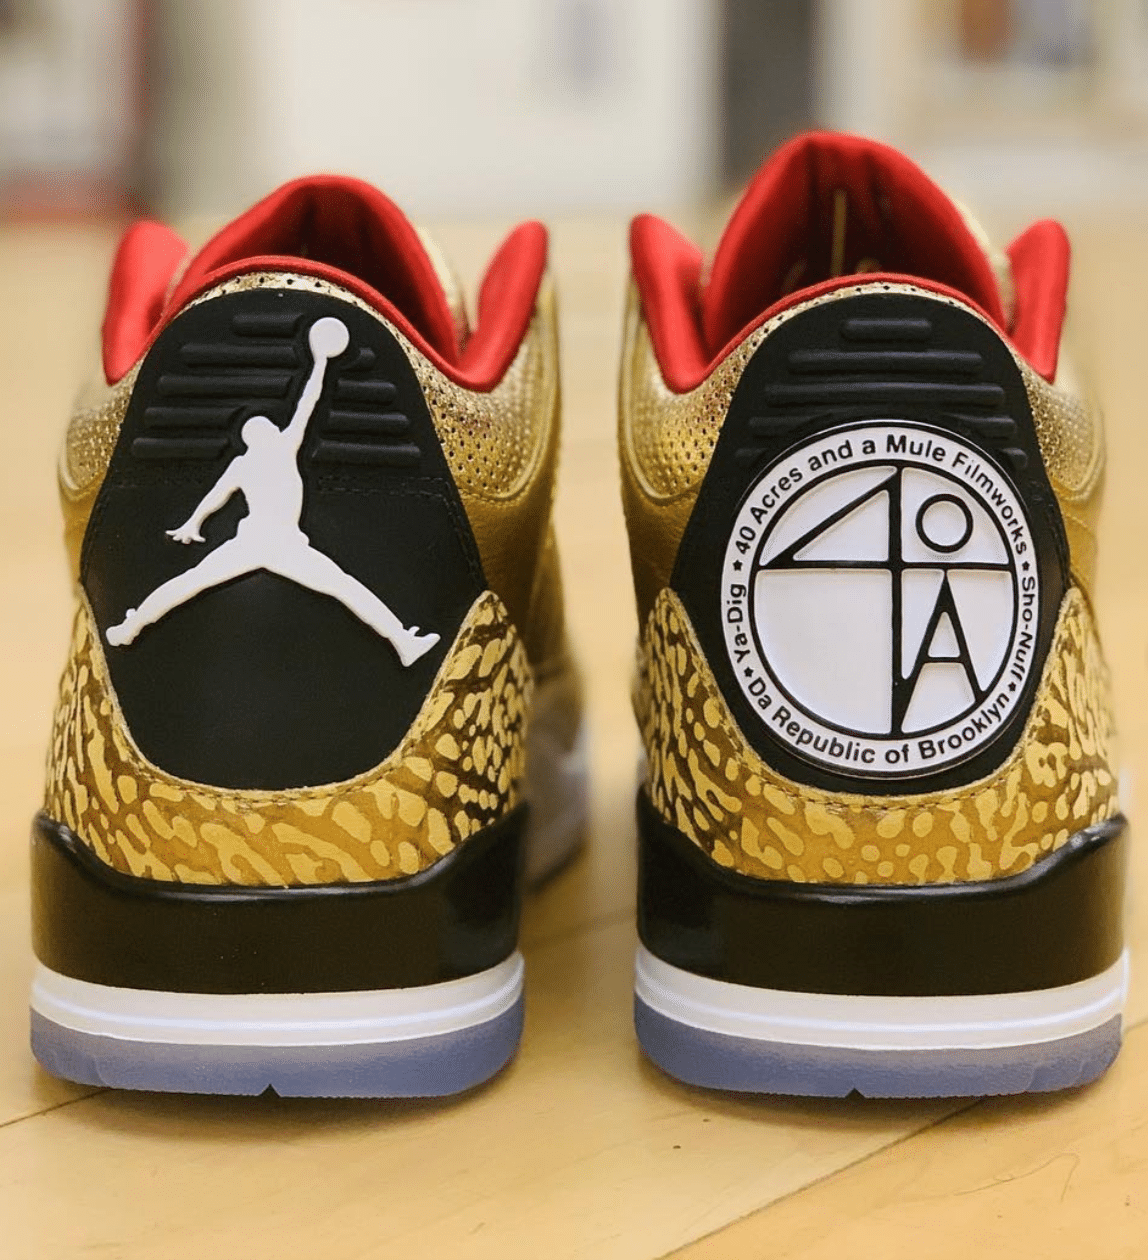 Pair Of Custom-Made Nike Sneakers